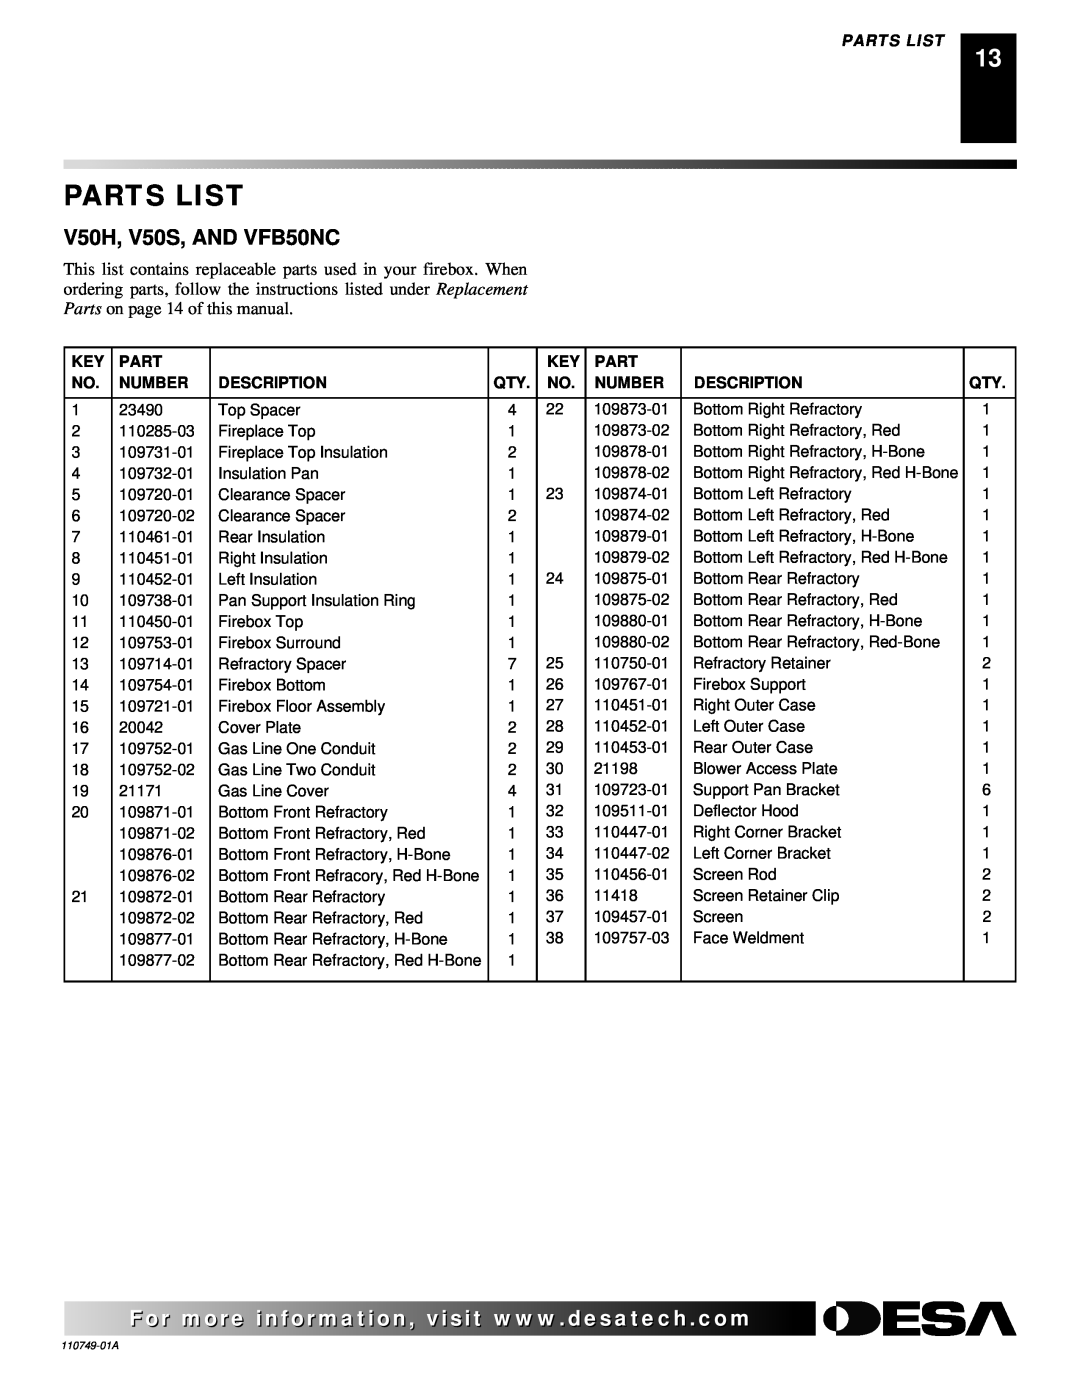 Desa VFB50NC, V50SH installation manual Parts List, Number, Description 